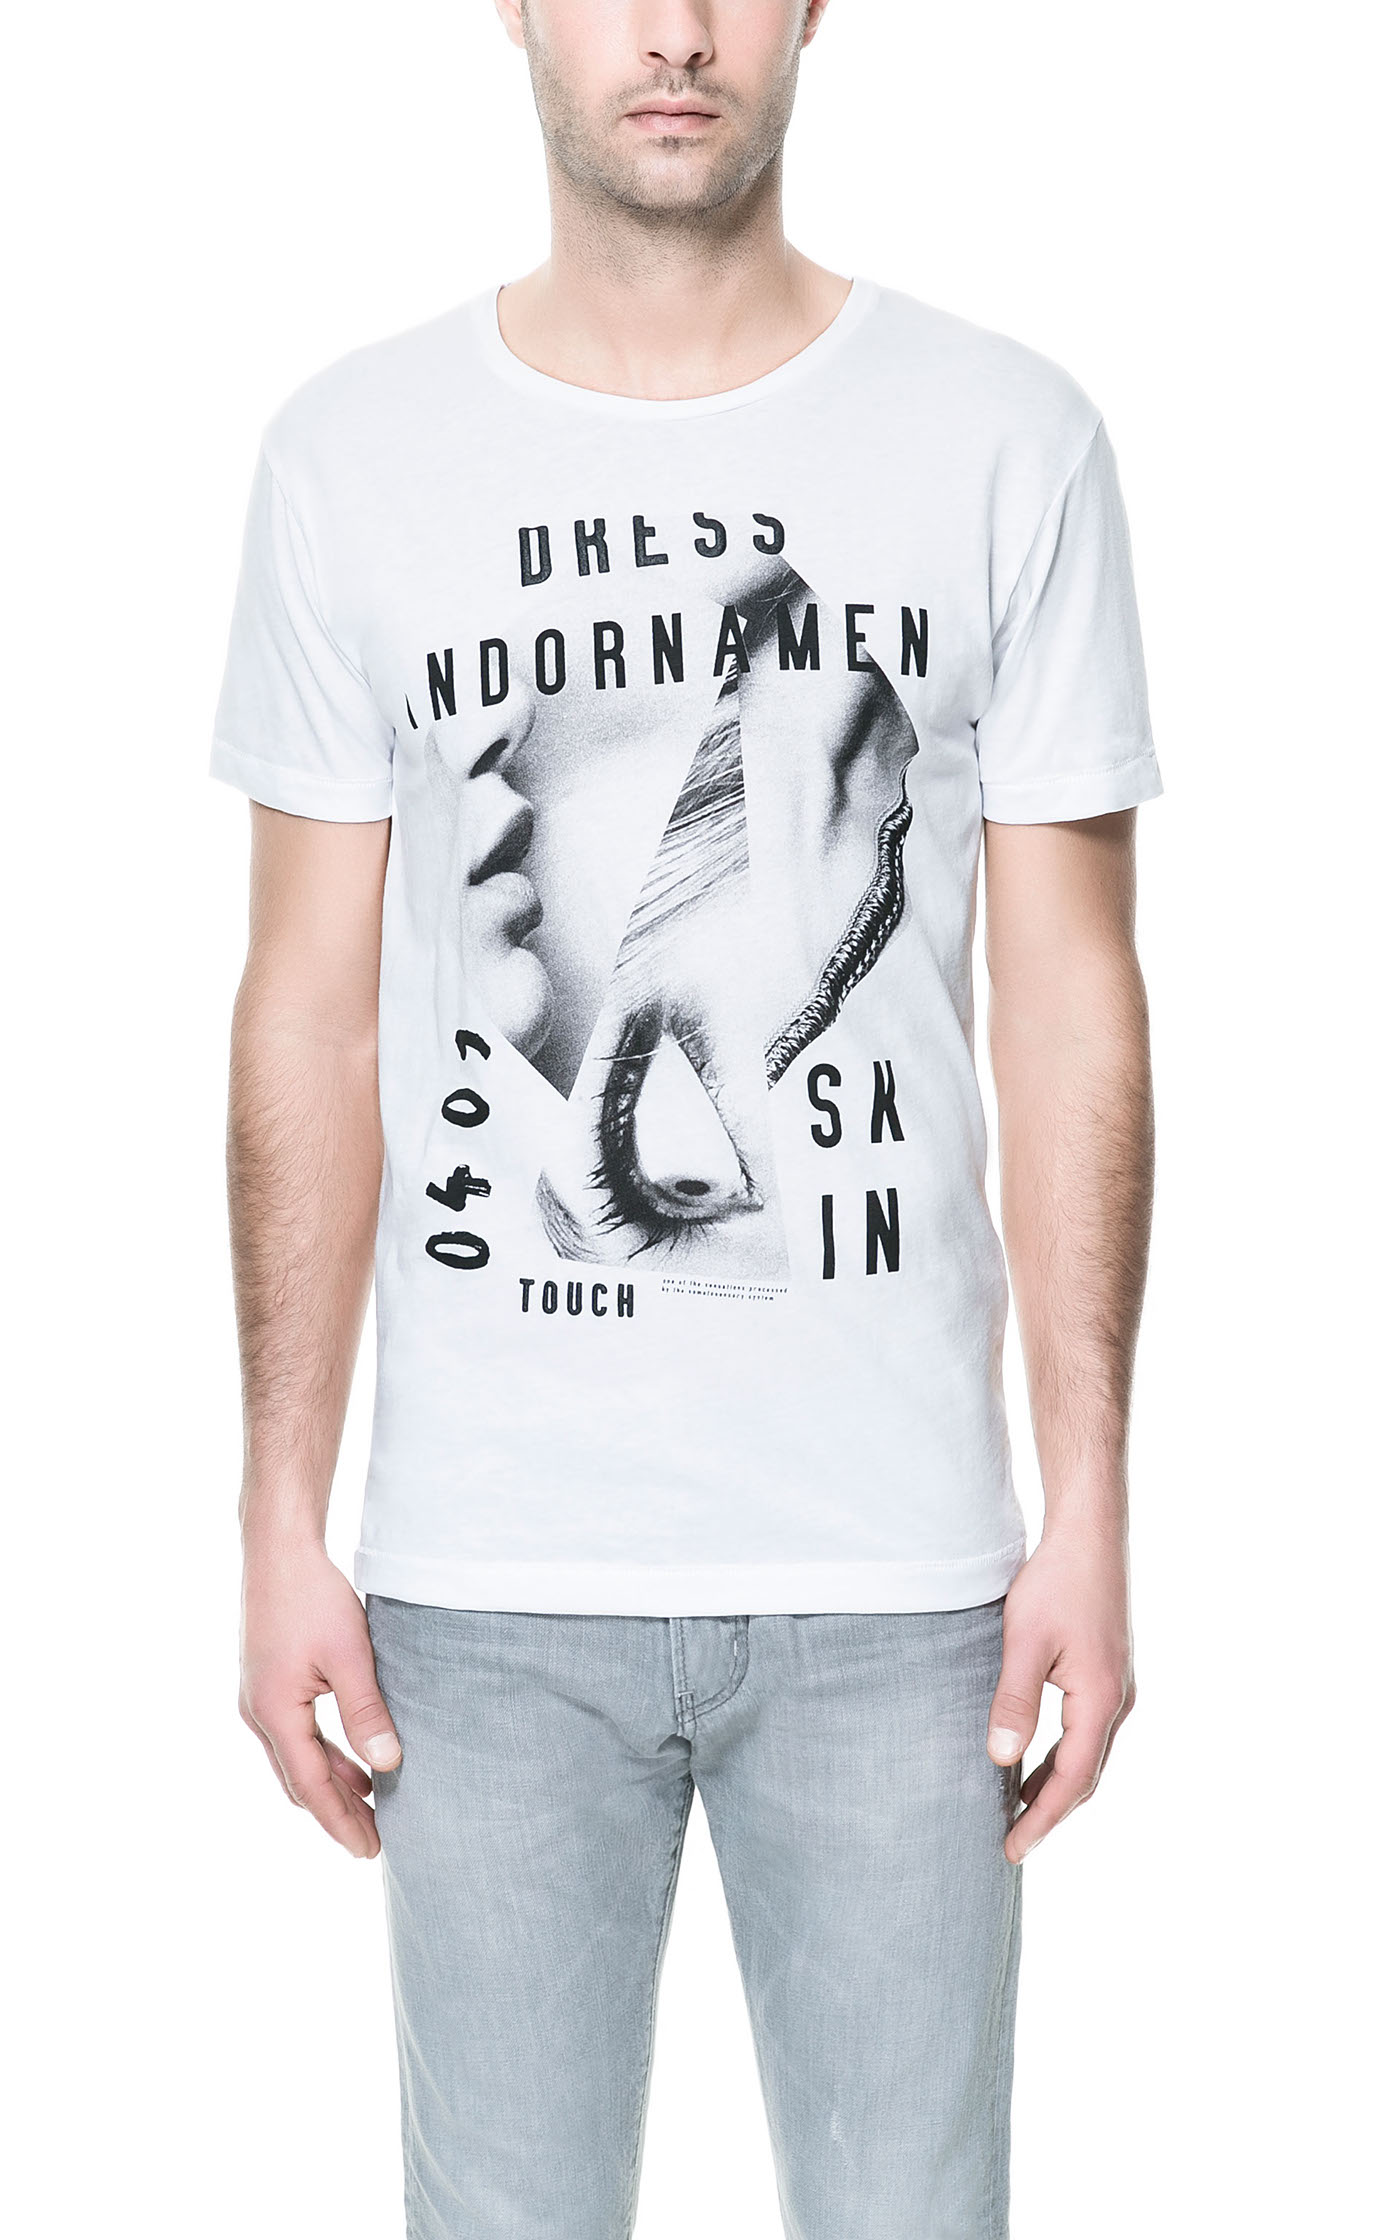 Printed T-shirt - Zara Man SS13 on Behance